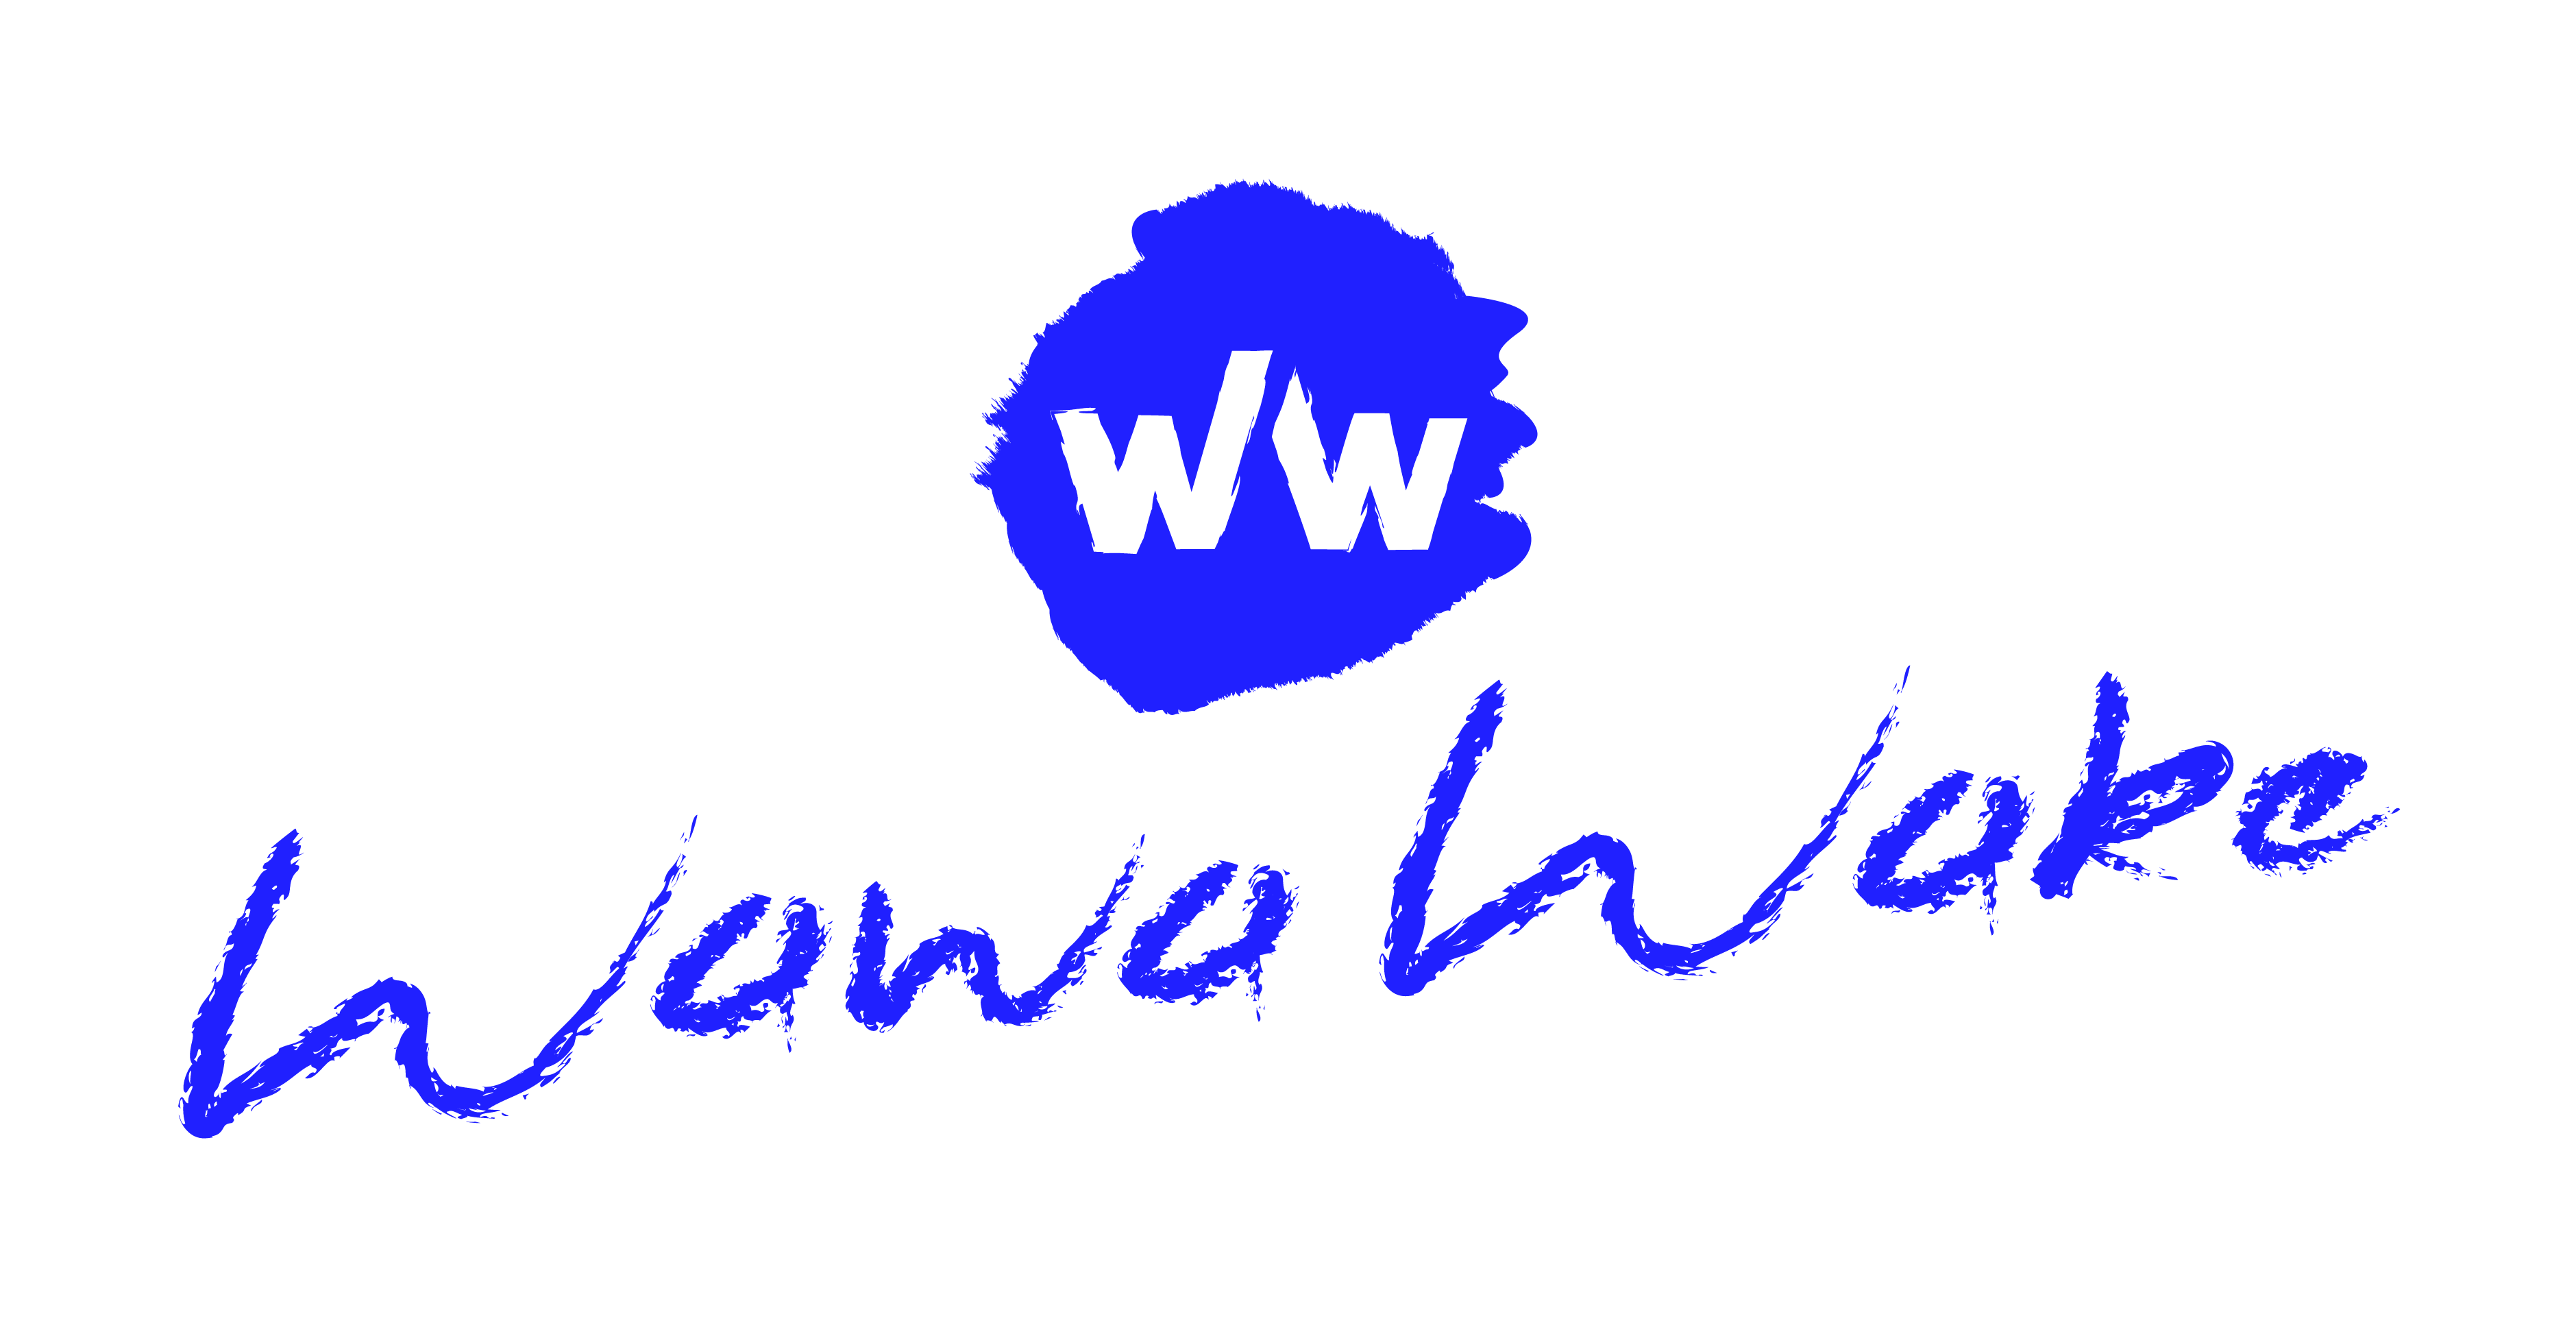 WaWaCamp